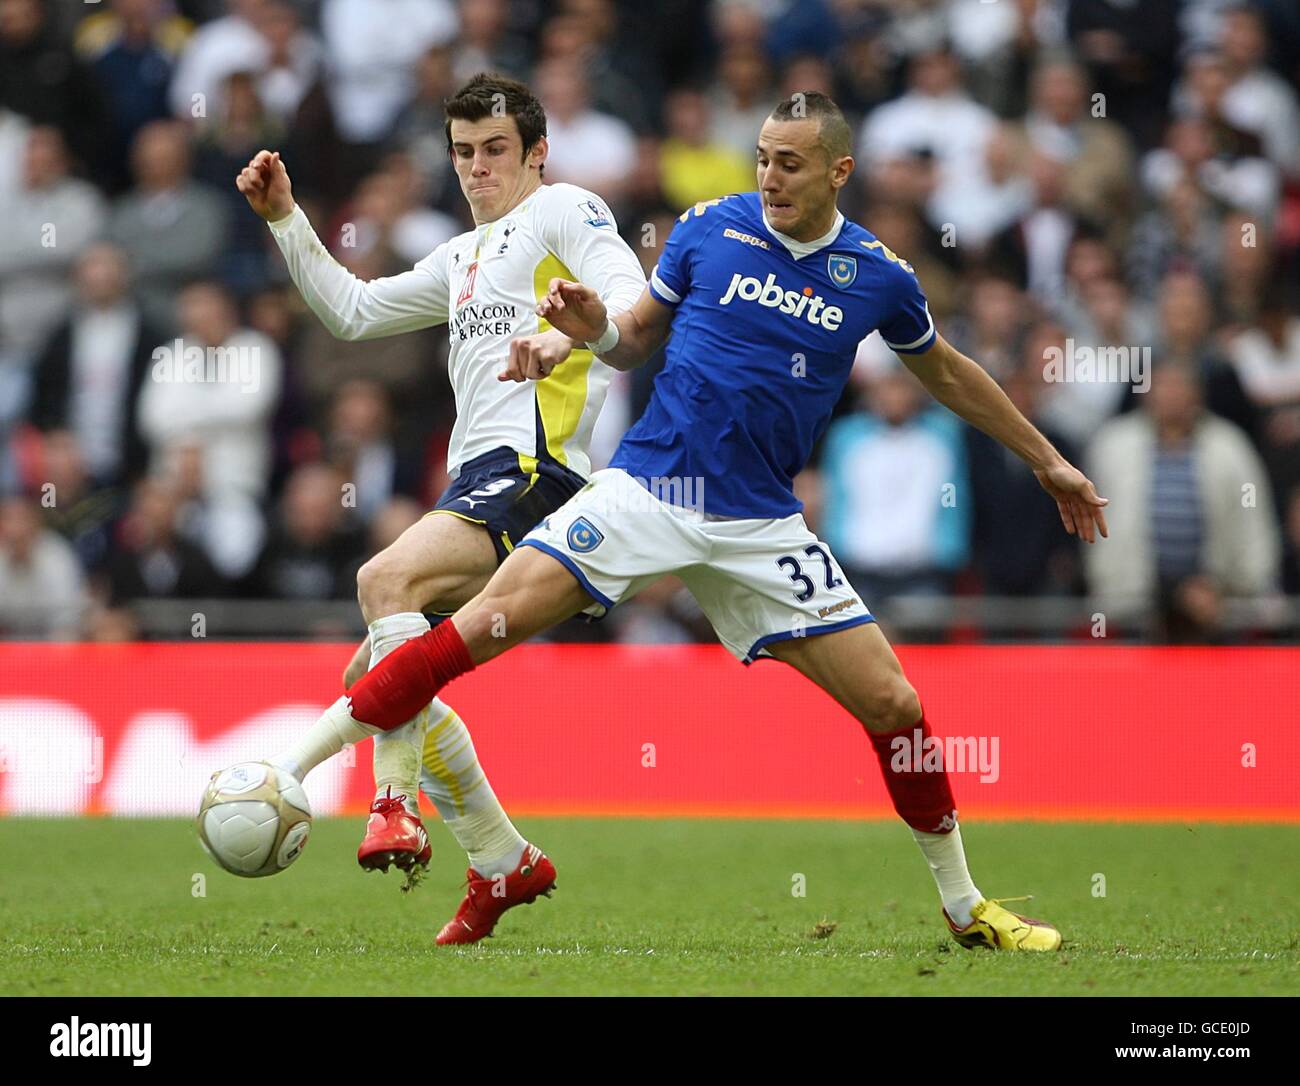 Soccer - FA Cup - Semi Final - Tottenham Hotspur v Portsmouth - Wembley Stadium. Tottenham Hotspur's Gareth Bale (left) and Portsmouth's Hassan Yebda (right) battle for the ball. Stock Photo